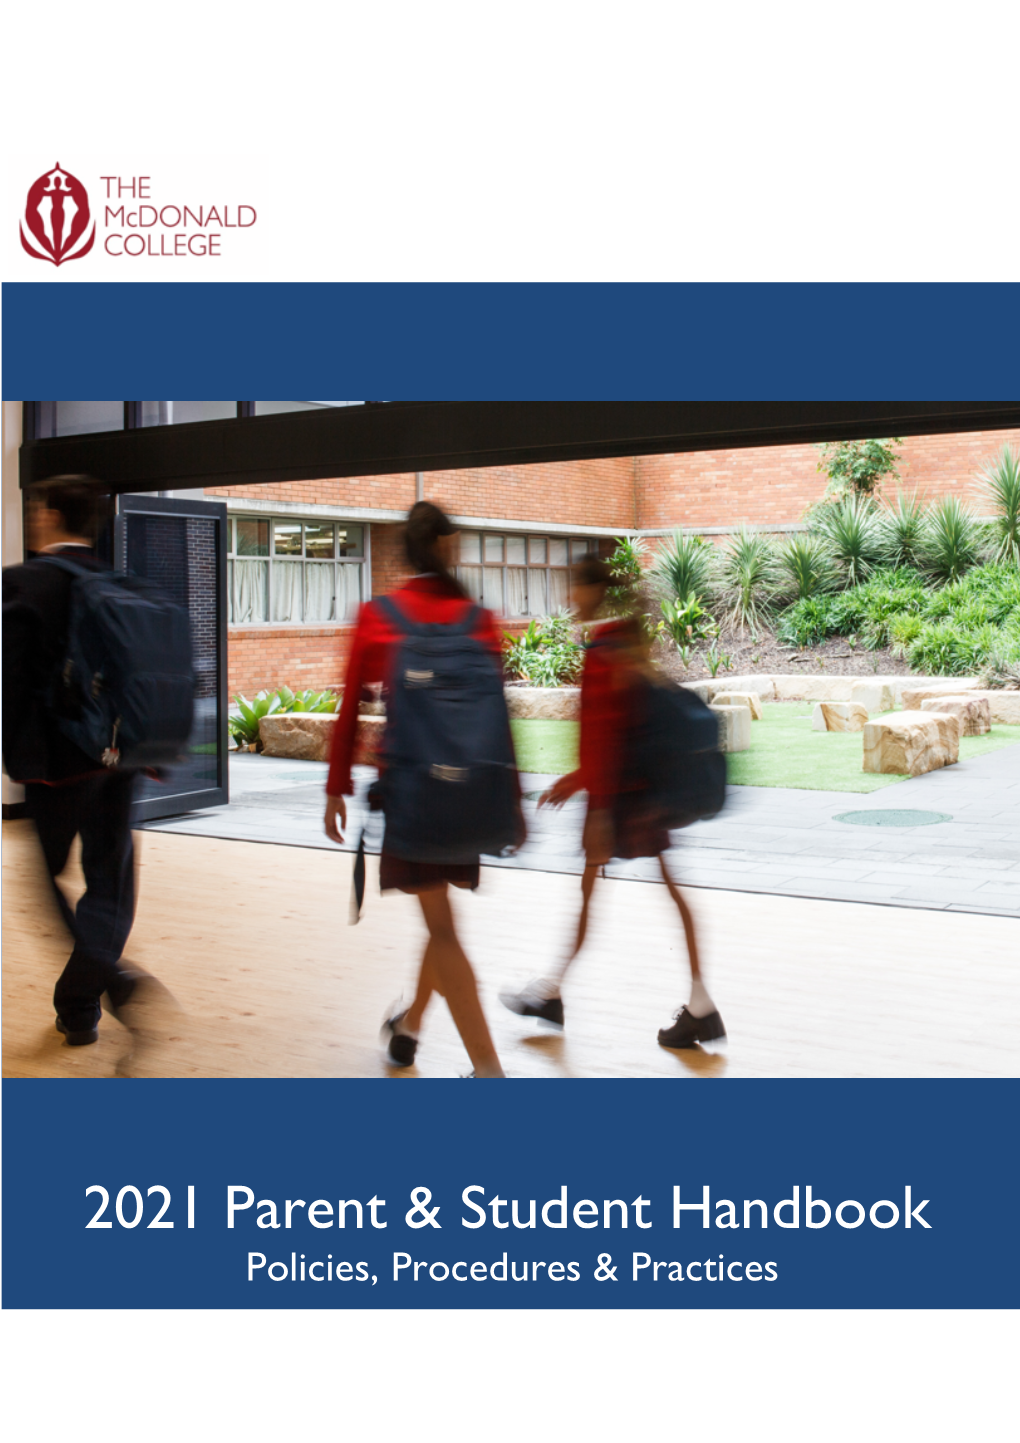 2021 Parent & Student Handbook